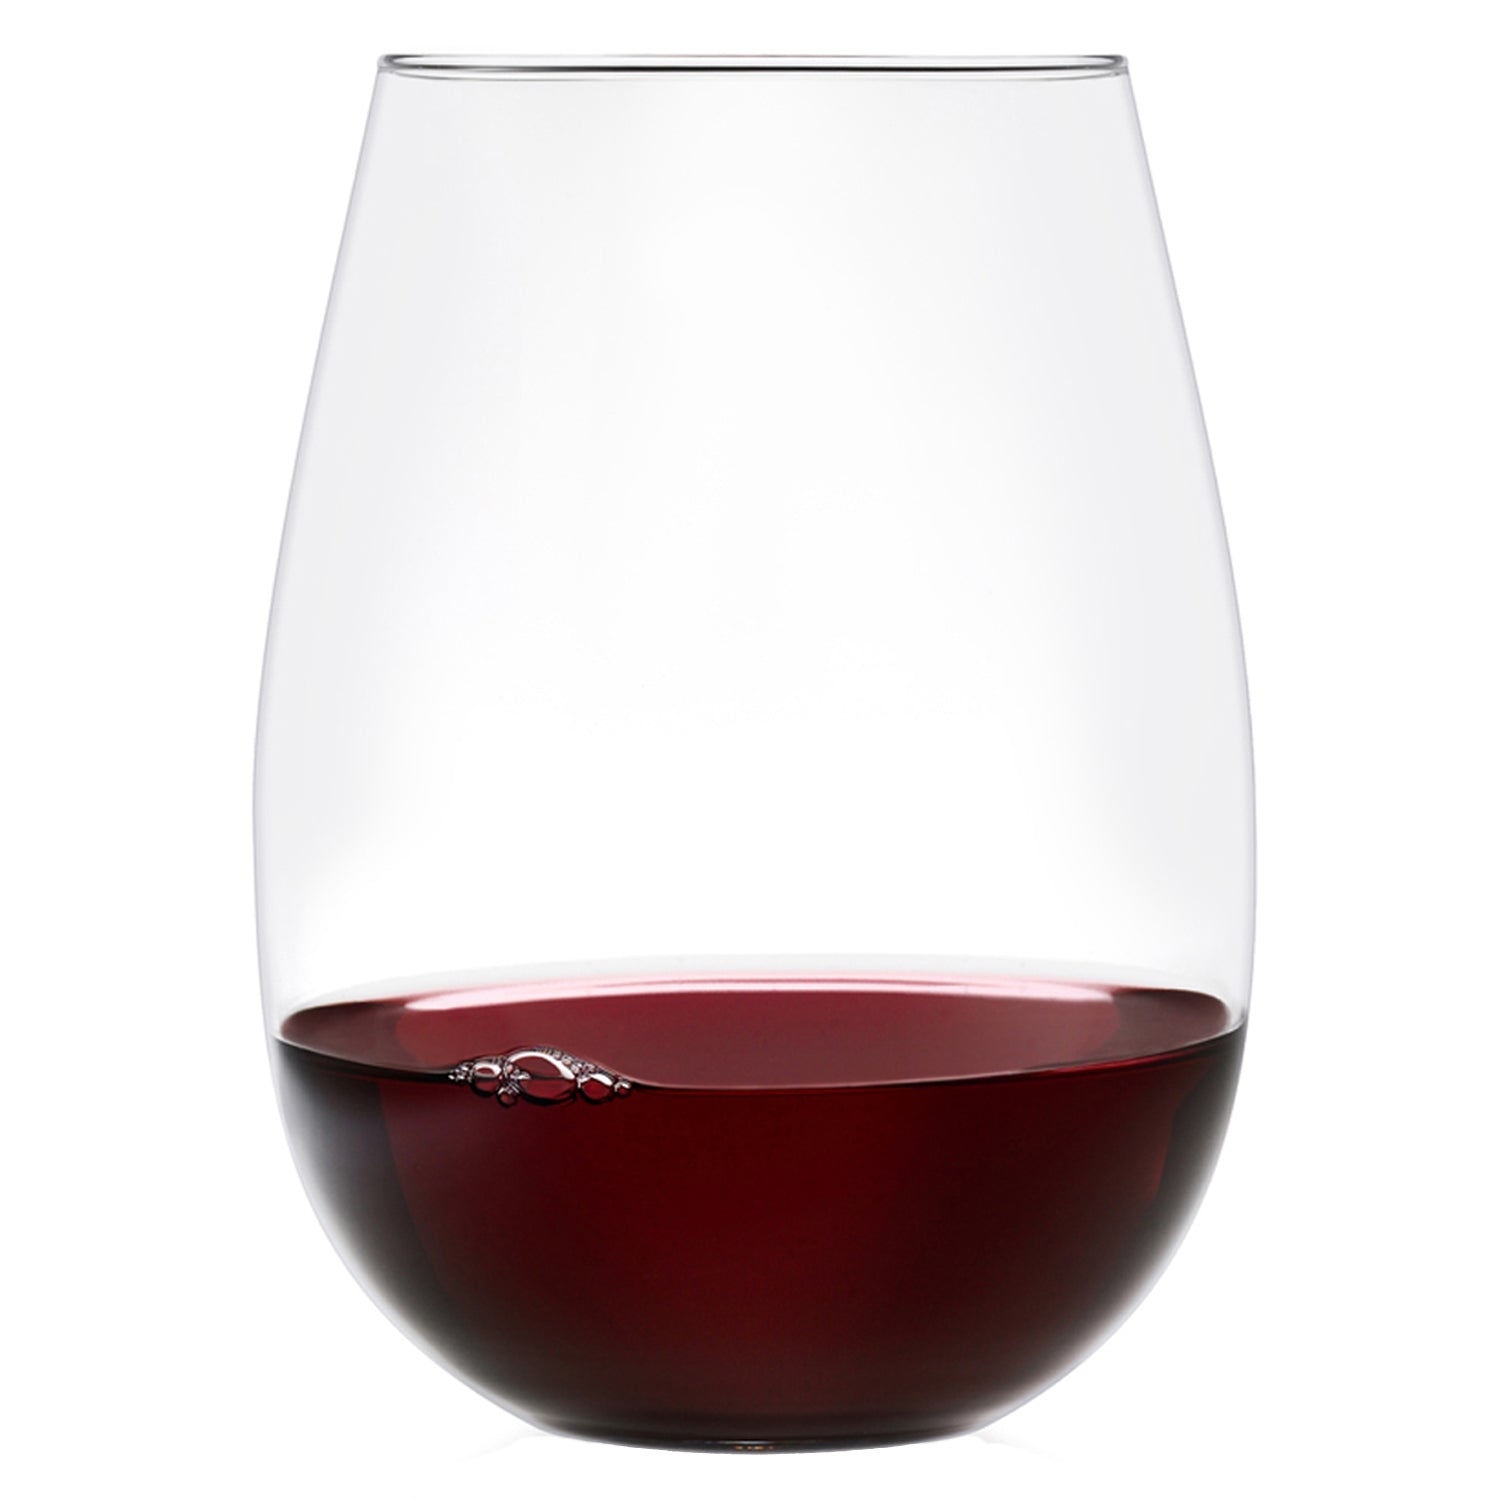 Vintner's Choice Stemless Bordeaux/Cabernet/Merlot Glass (Set of 8)